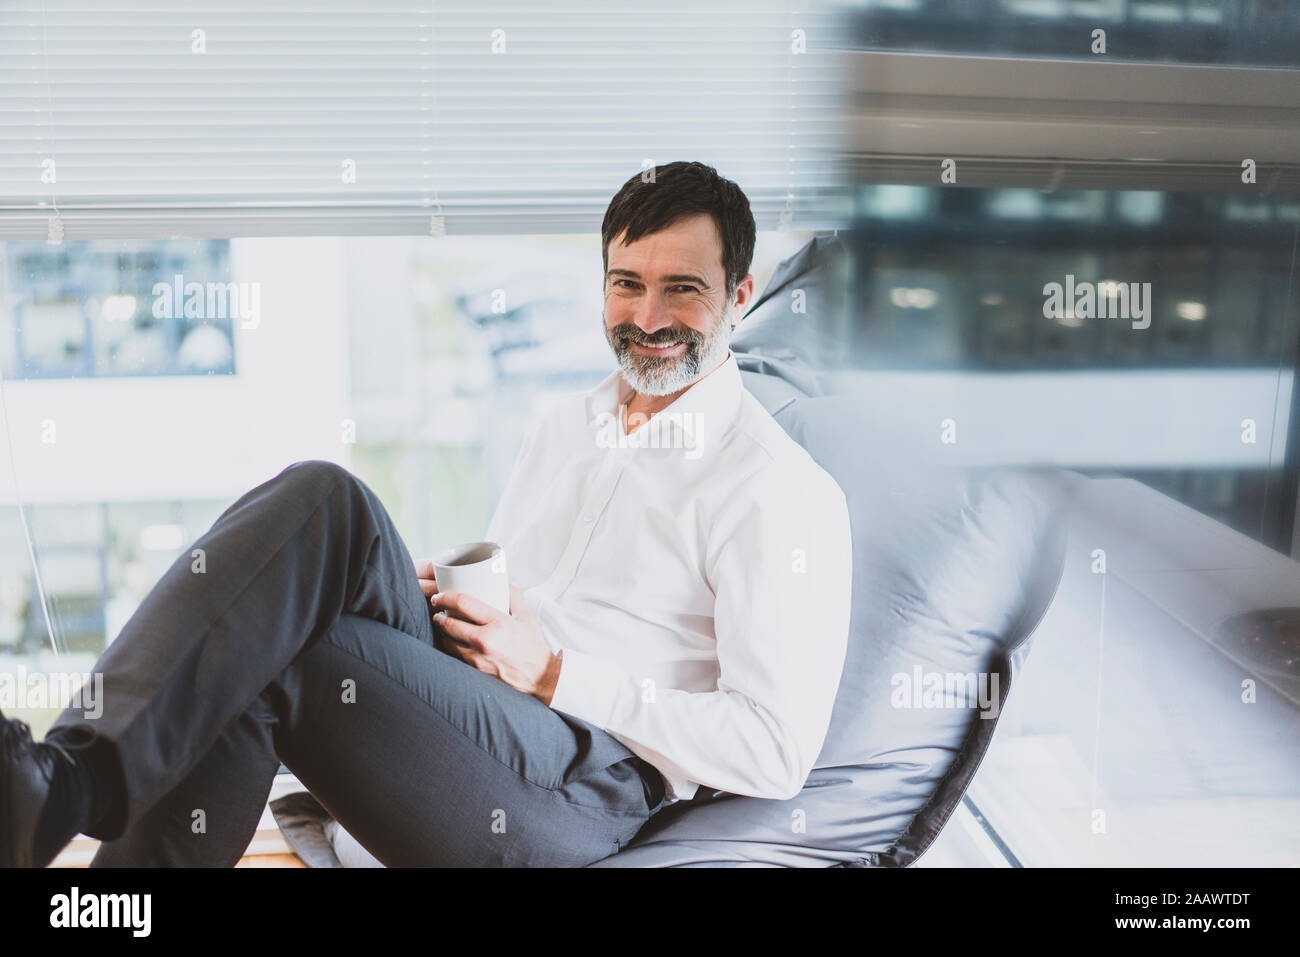 Portrait of smiling mature businessman having a coffee break Stock Photo